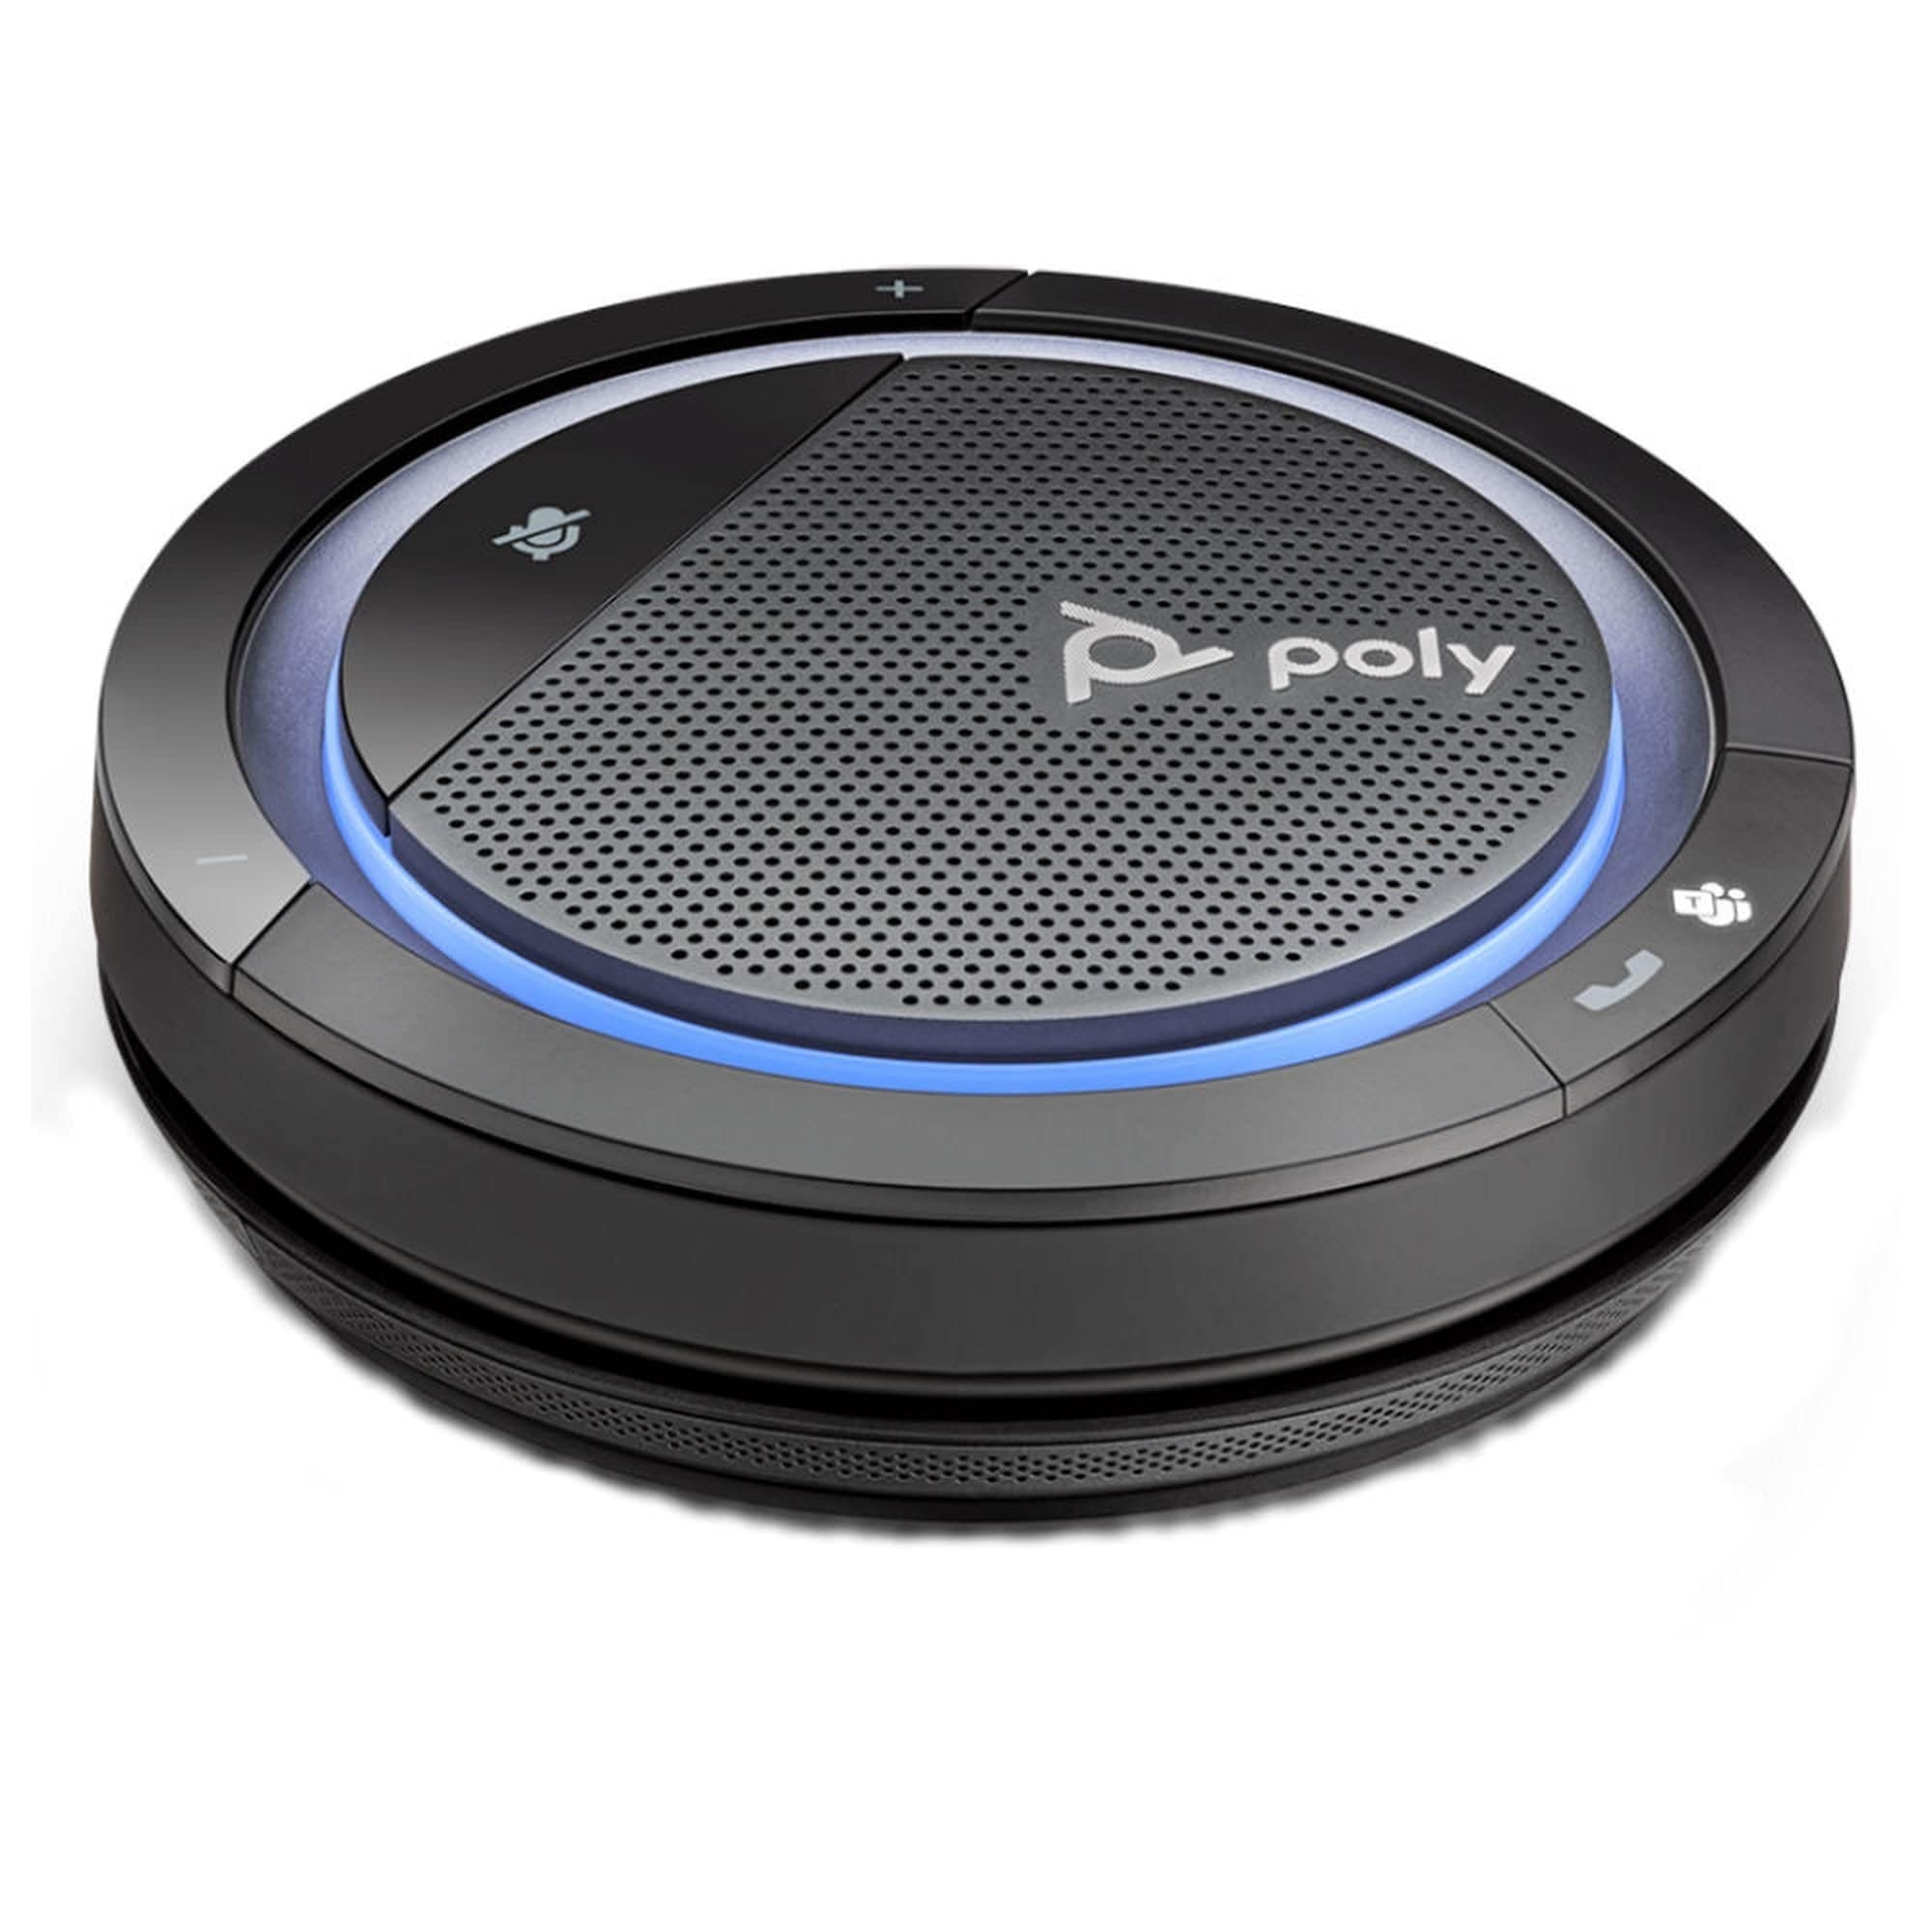 Poly (Plantronics) Calisto 3200 USB Conference Speakerphone 21090001 - Buy Singapore